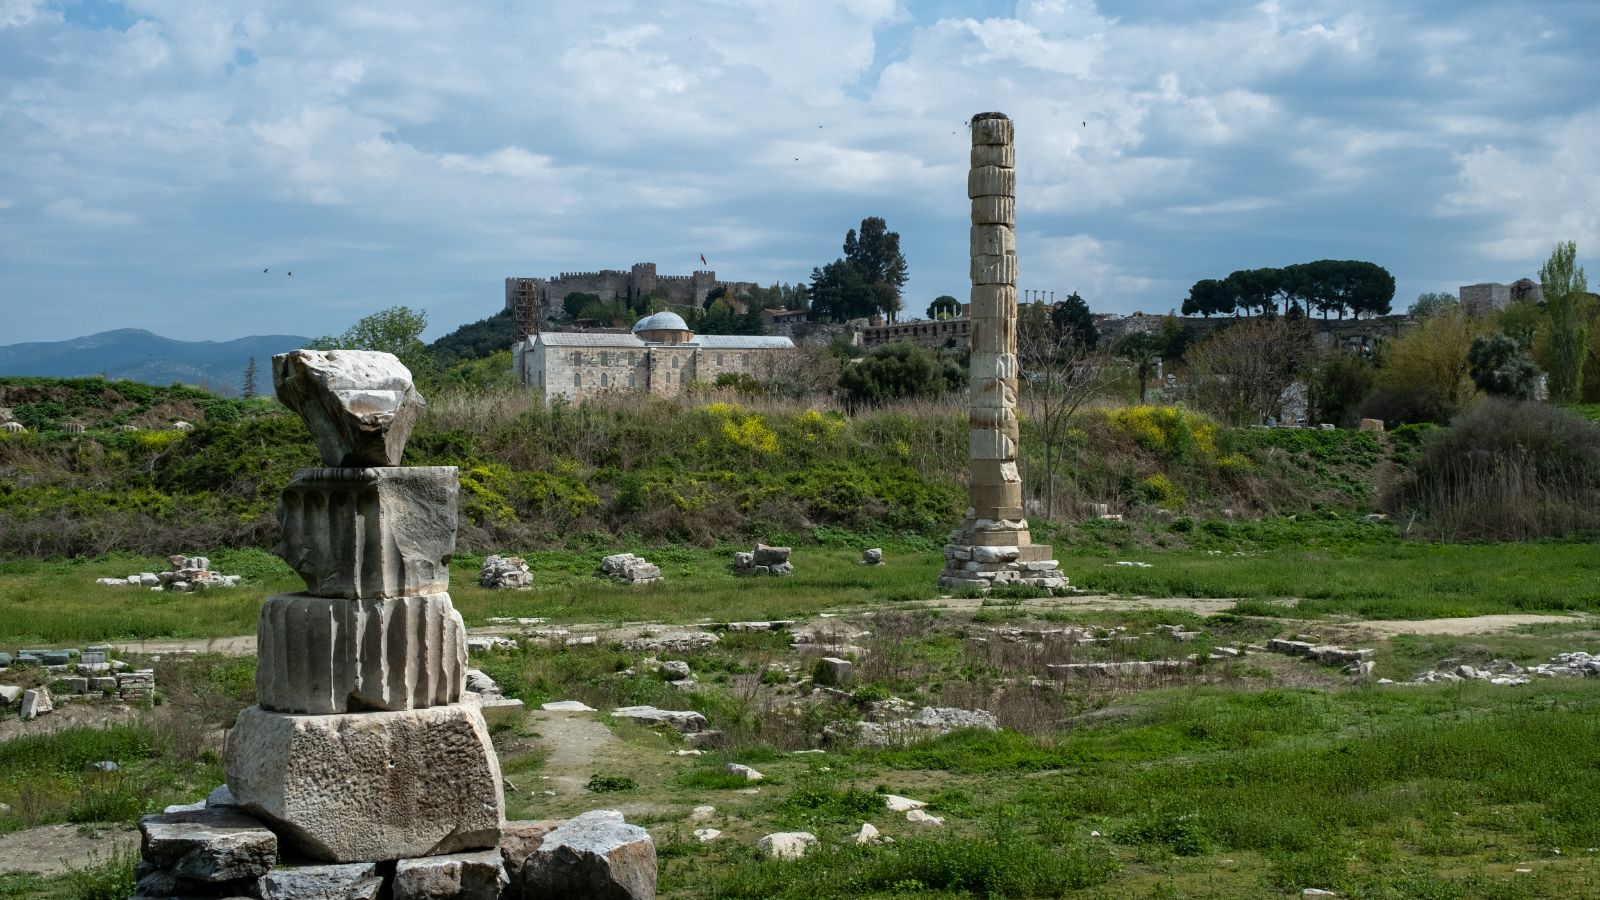 Goddess of Fertility: The Temple of Artemis at Ephesus